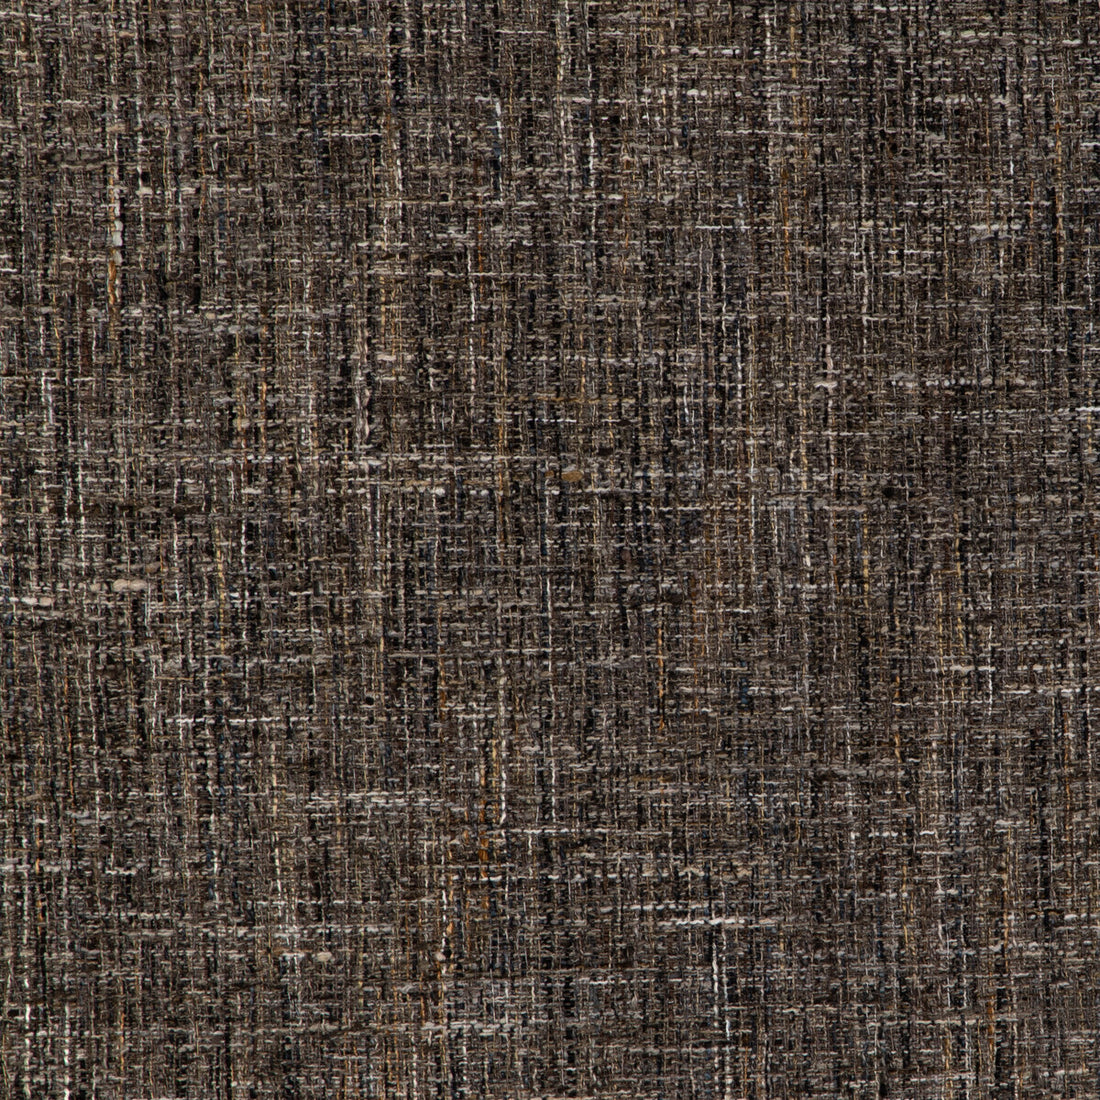 Kravet Smart fabric in 36660-816 color - pattern 36660.816.0 - by Kravet Smart in the Performance Kravetarmor collection